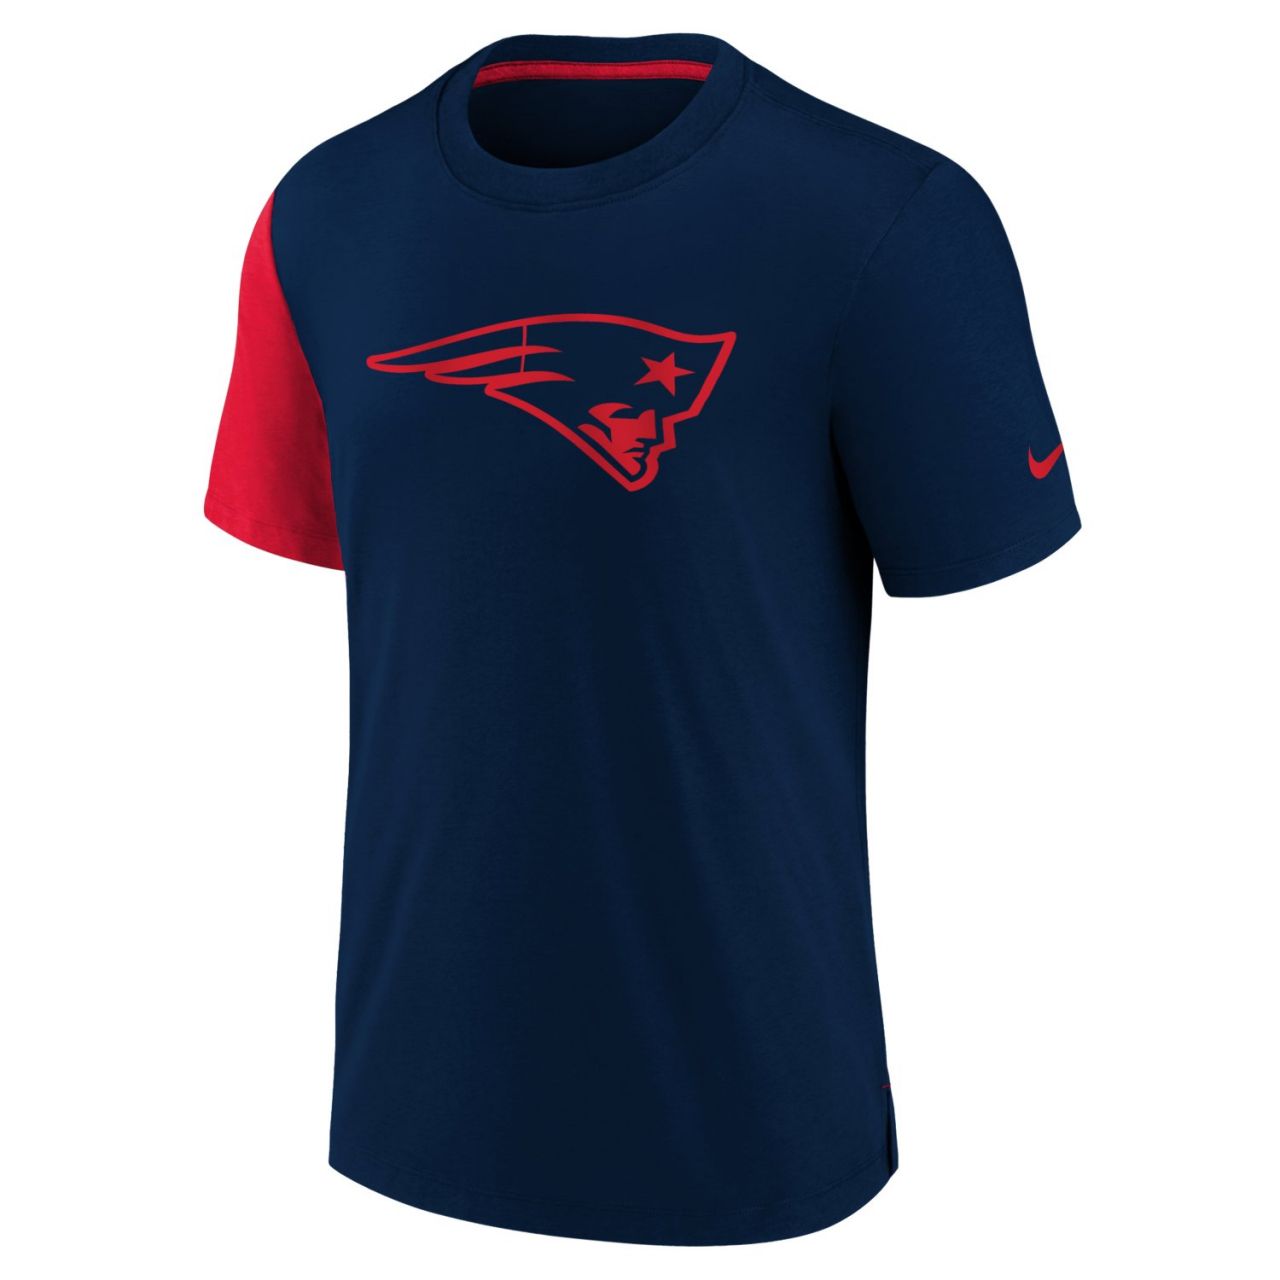 Nike NFL Fashion Kinder Shirt - New England Patriots von Nike